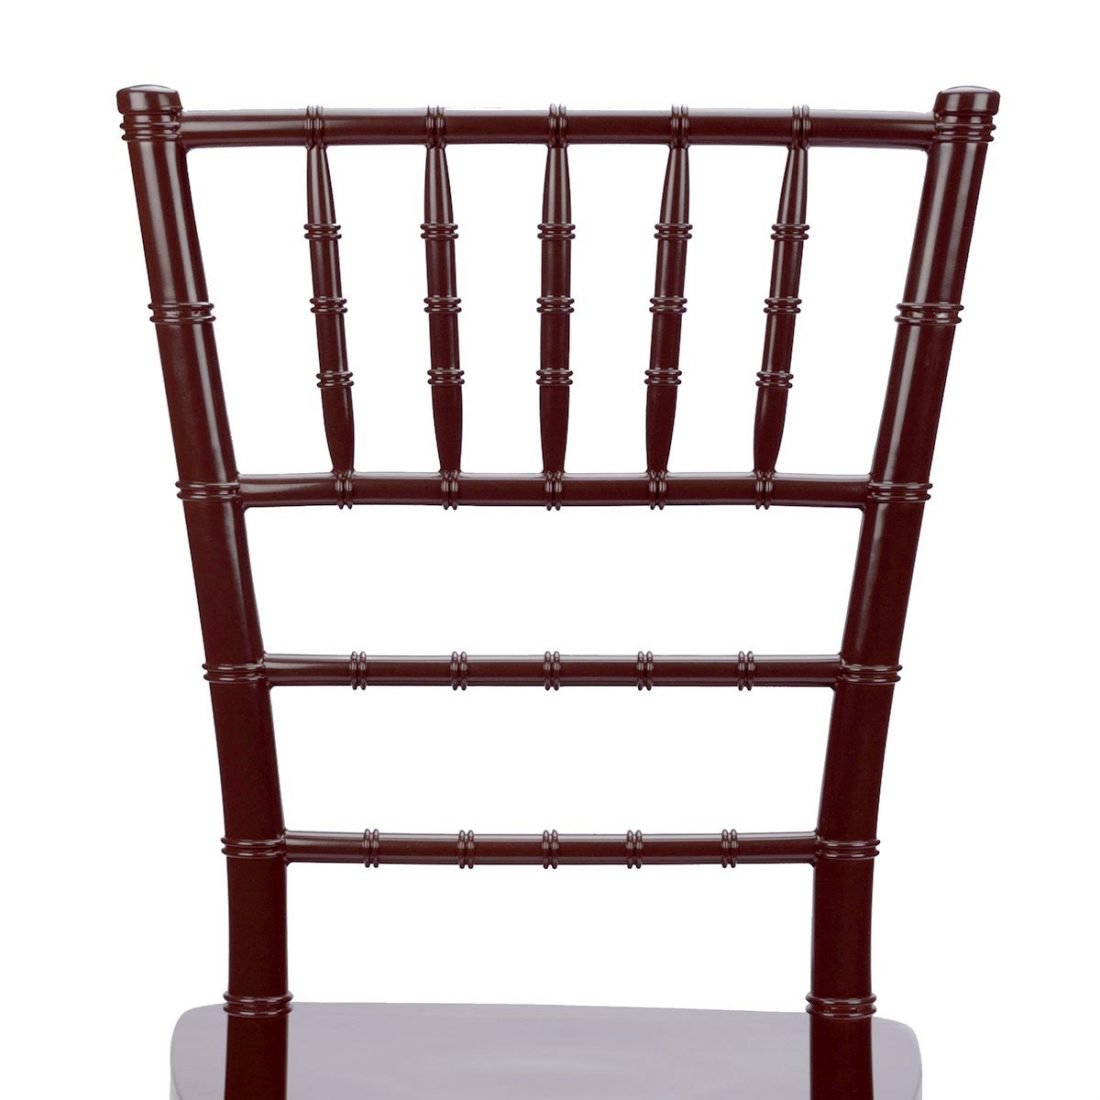 Fruitwood Resin "Inner Steel-Core" Stacking Chiavari Chair